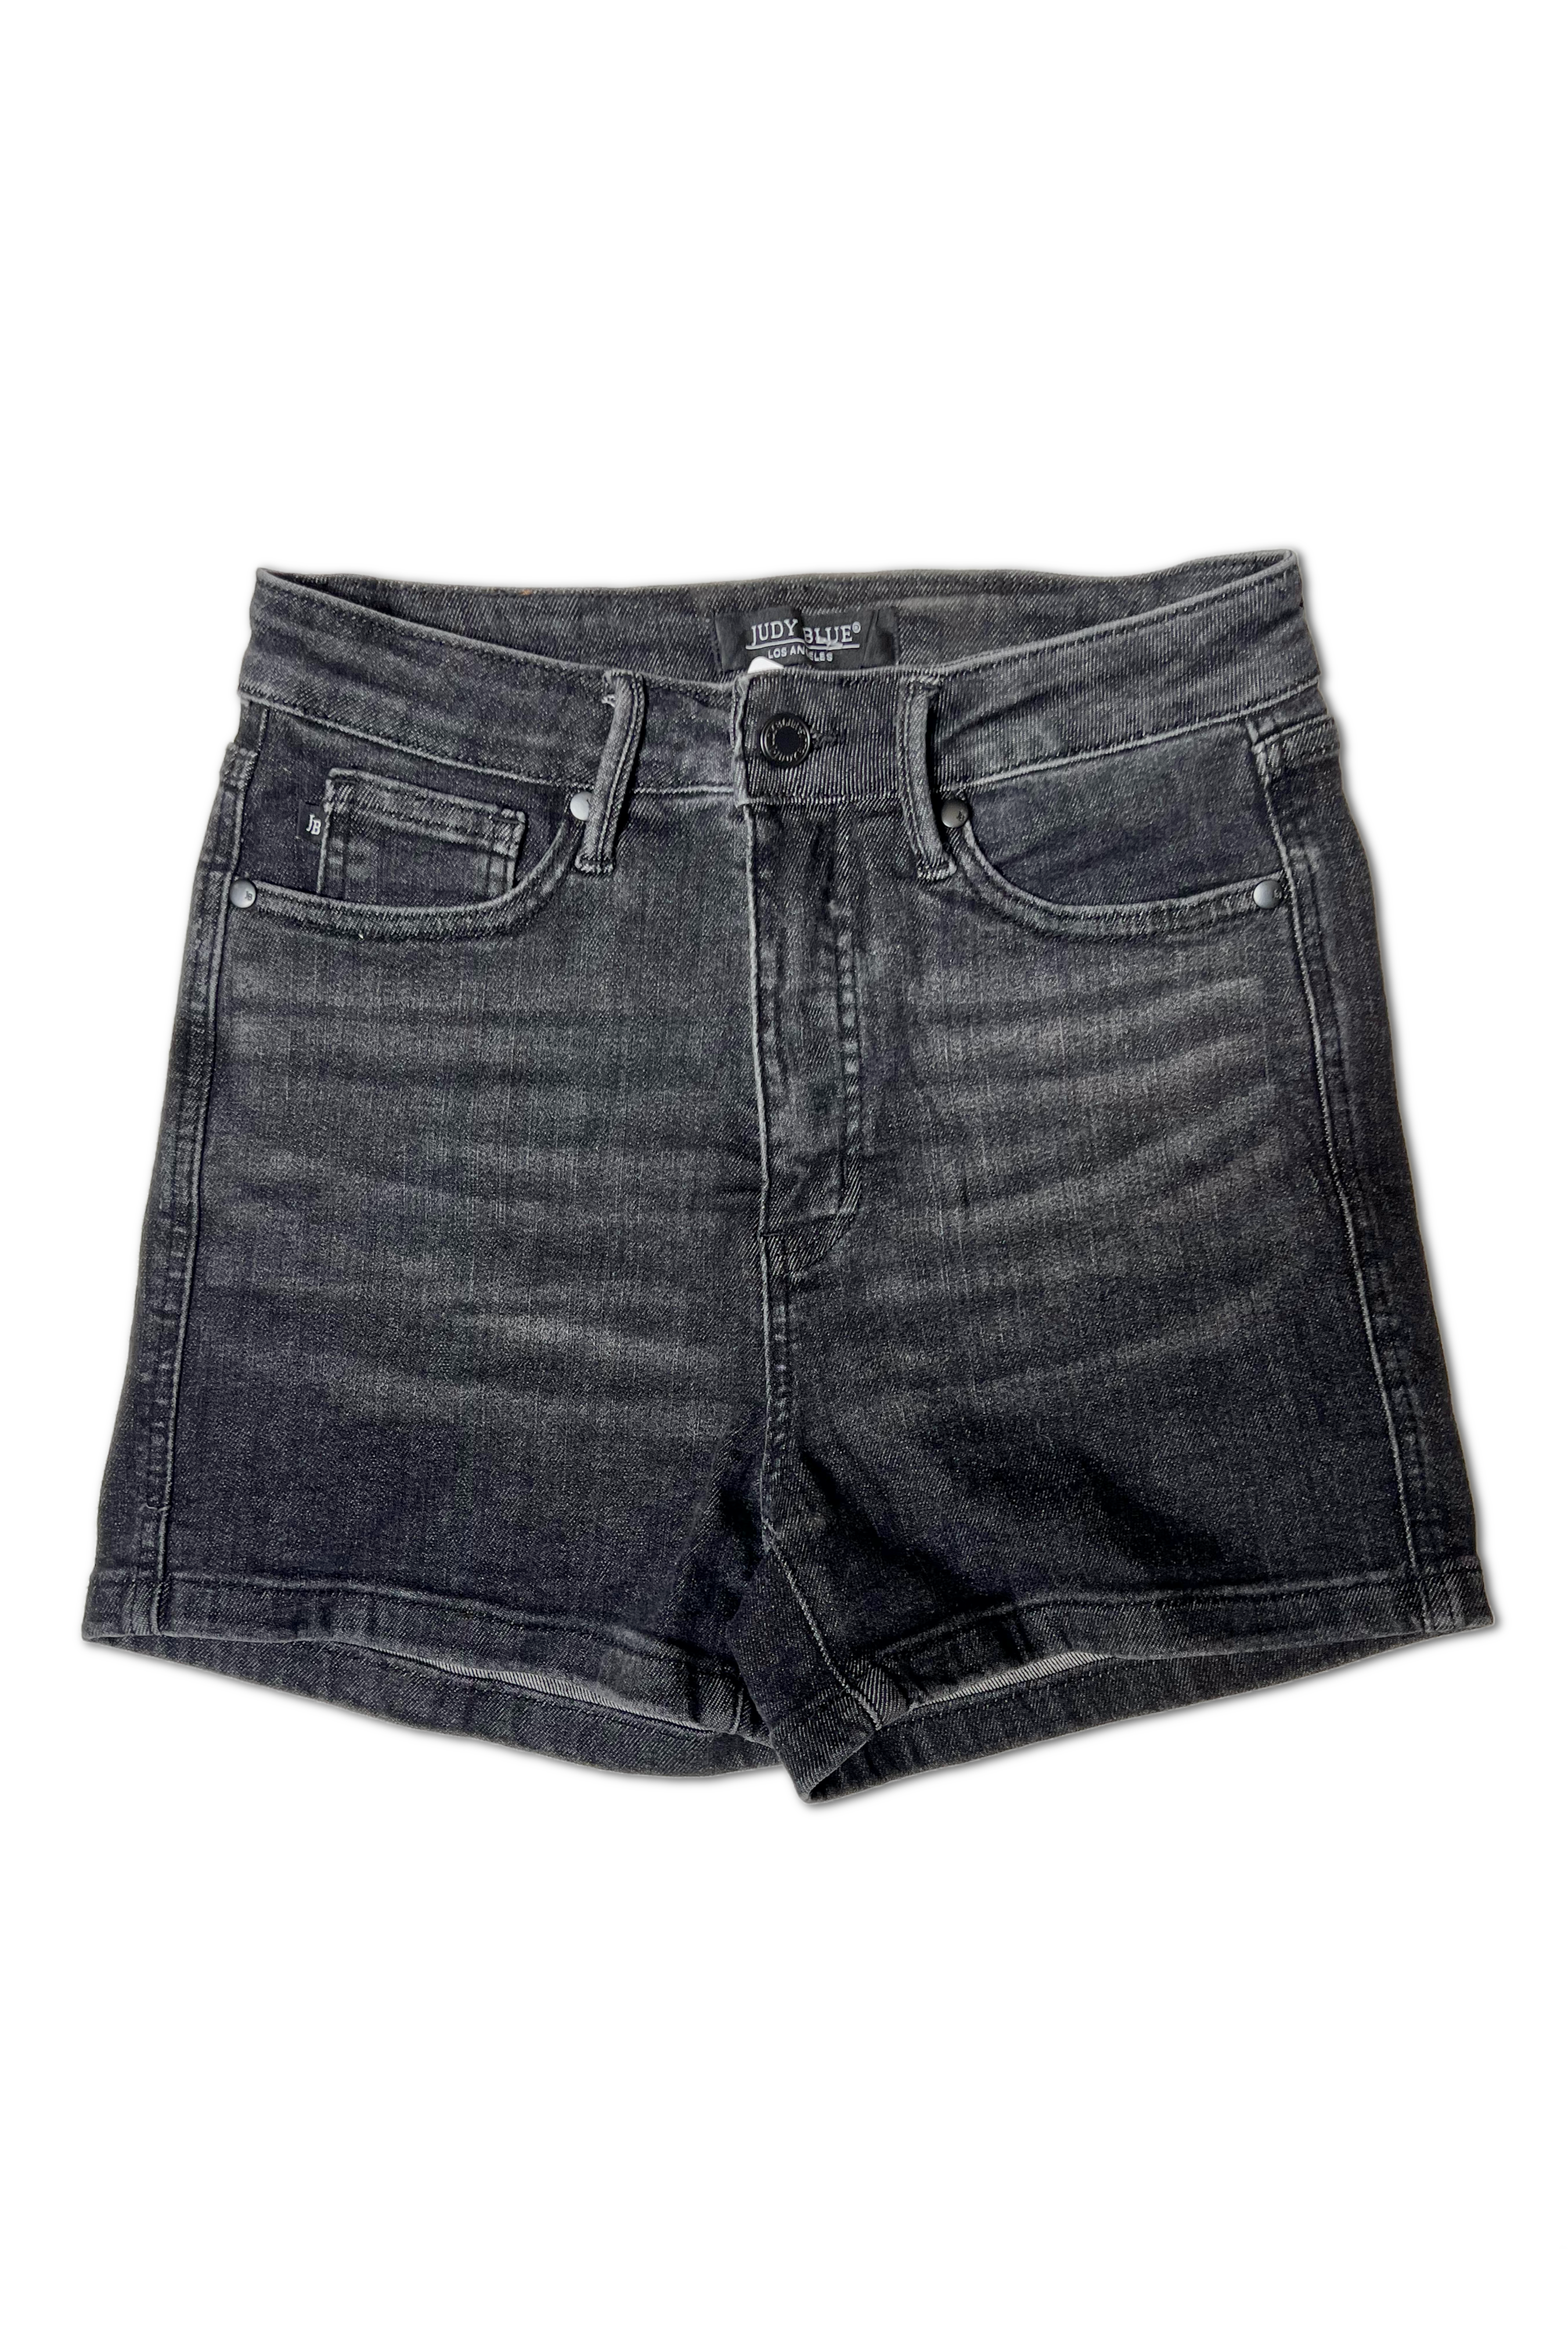 Fade Into You - Judy Blue Tummy Control Shorts-JB Boutique Simplified-Urban Threadz Boutique, Women's Fashion Boutique in Saugatuck, MI